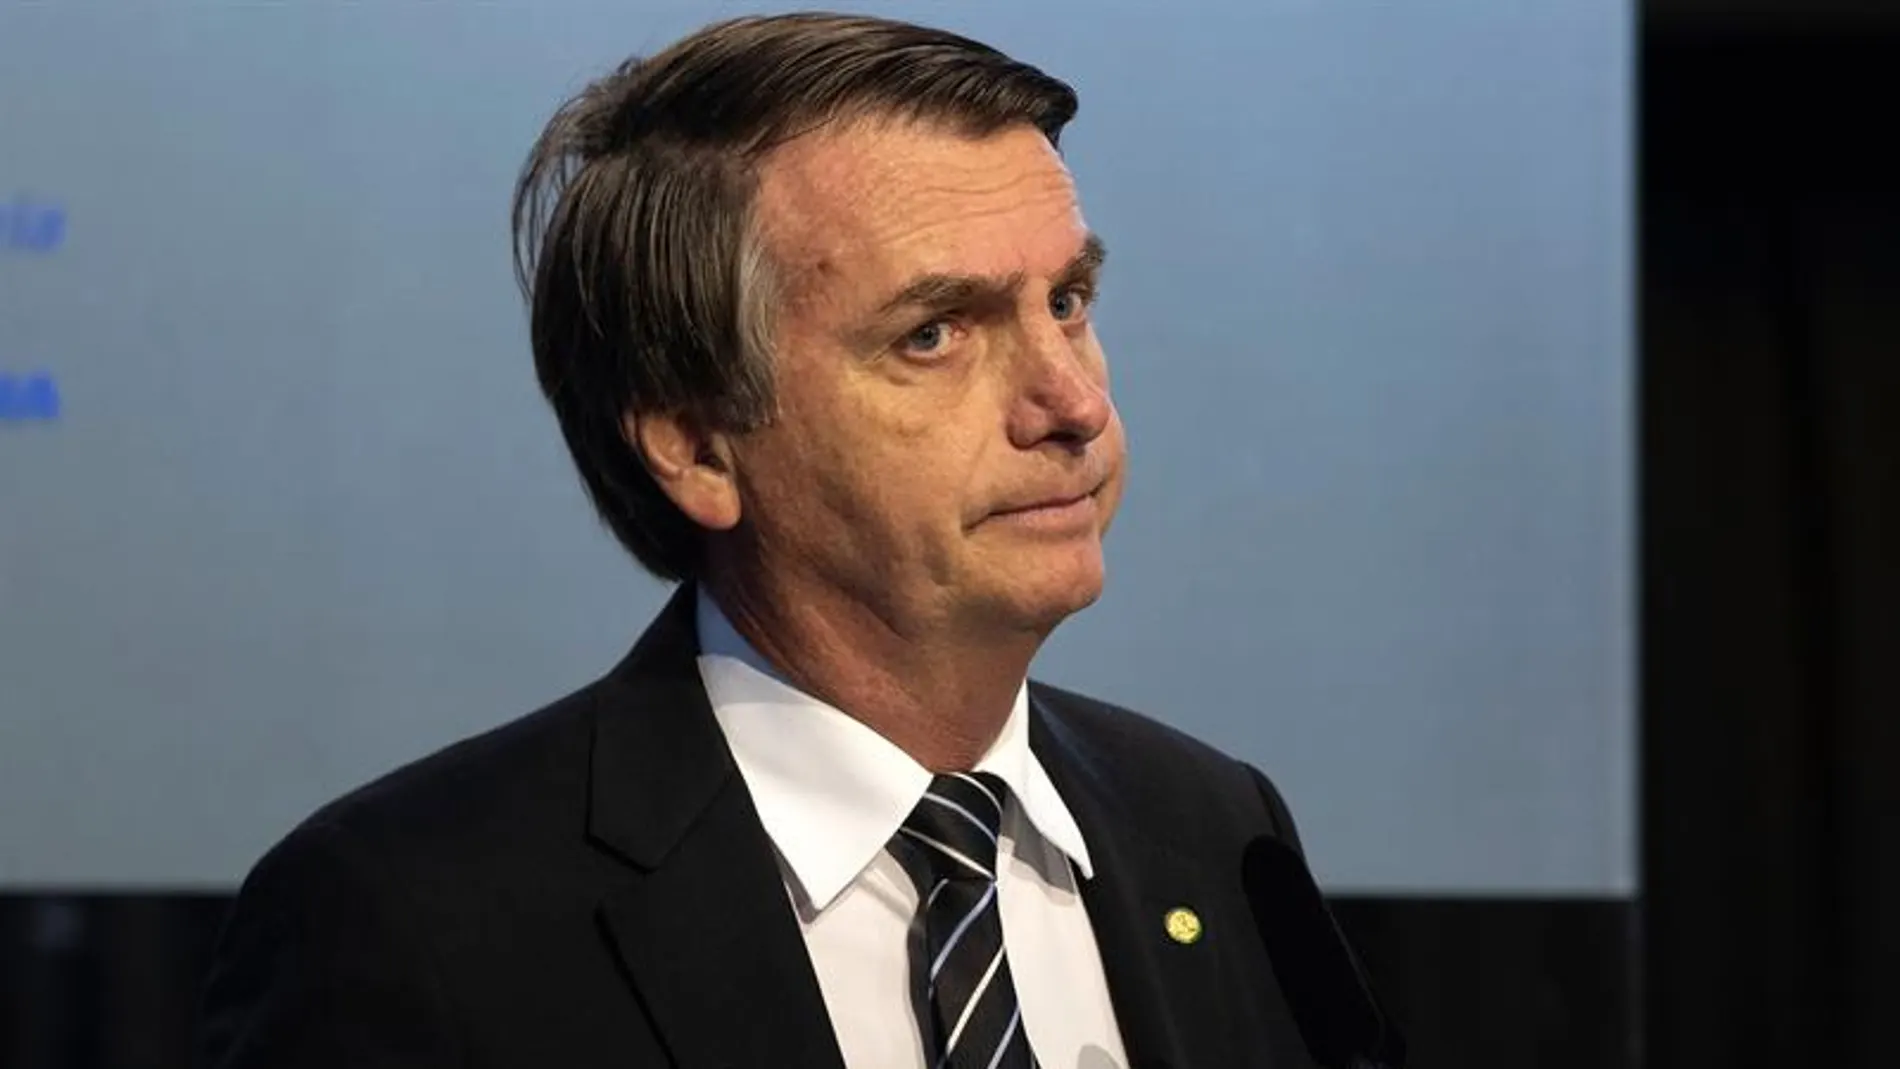 En la imagen, el candidato ultraderechista brasileño, Jair Bolsonaro 